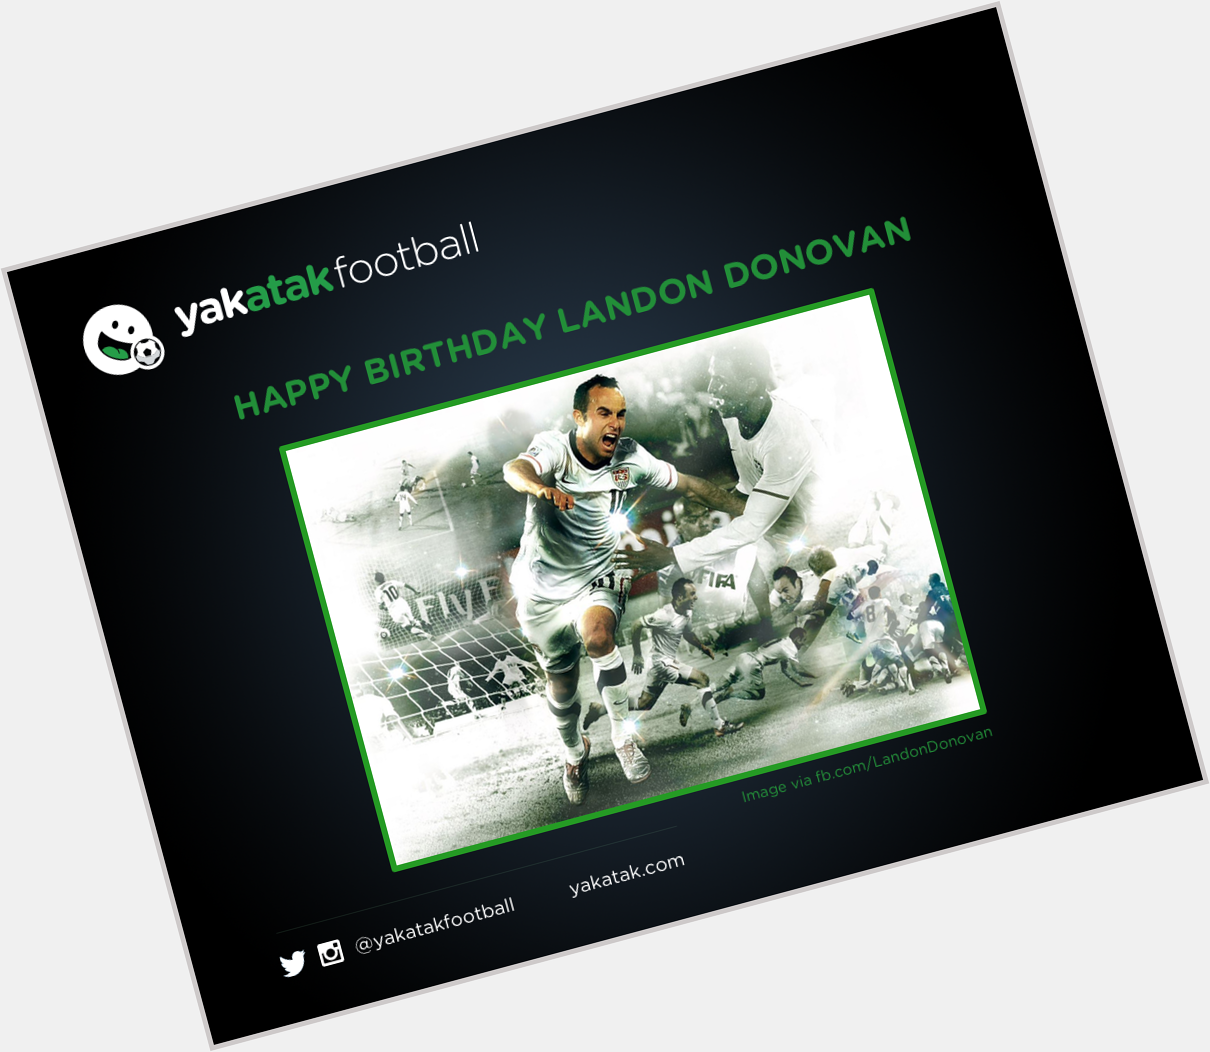 Landon Donovan for the - 157 Caps
- 57 Goals
- 58 Assists 

Happy Birthday, Landon. 